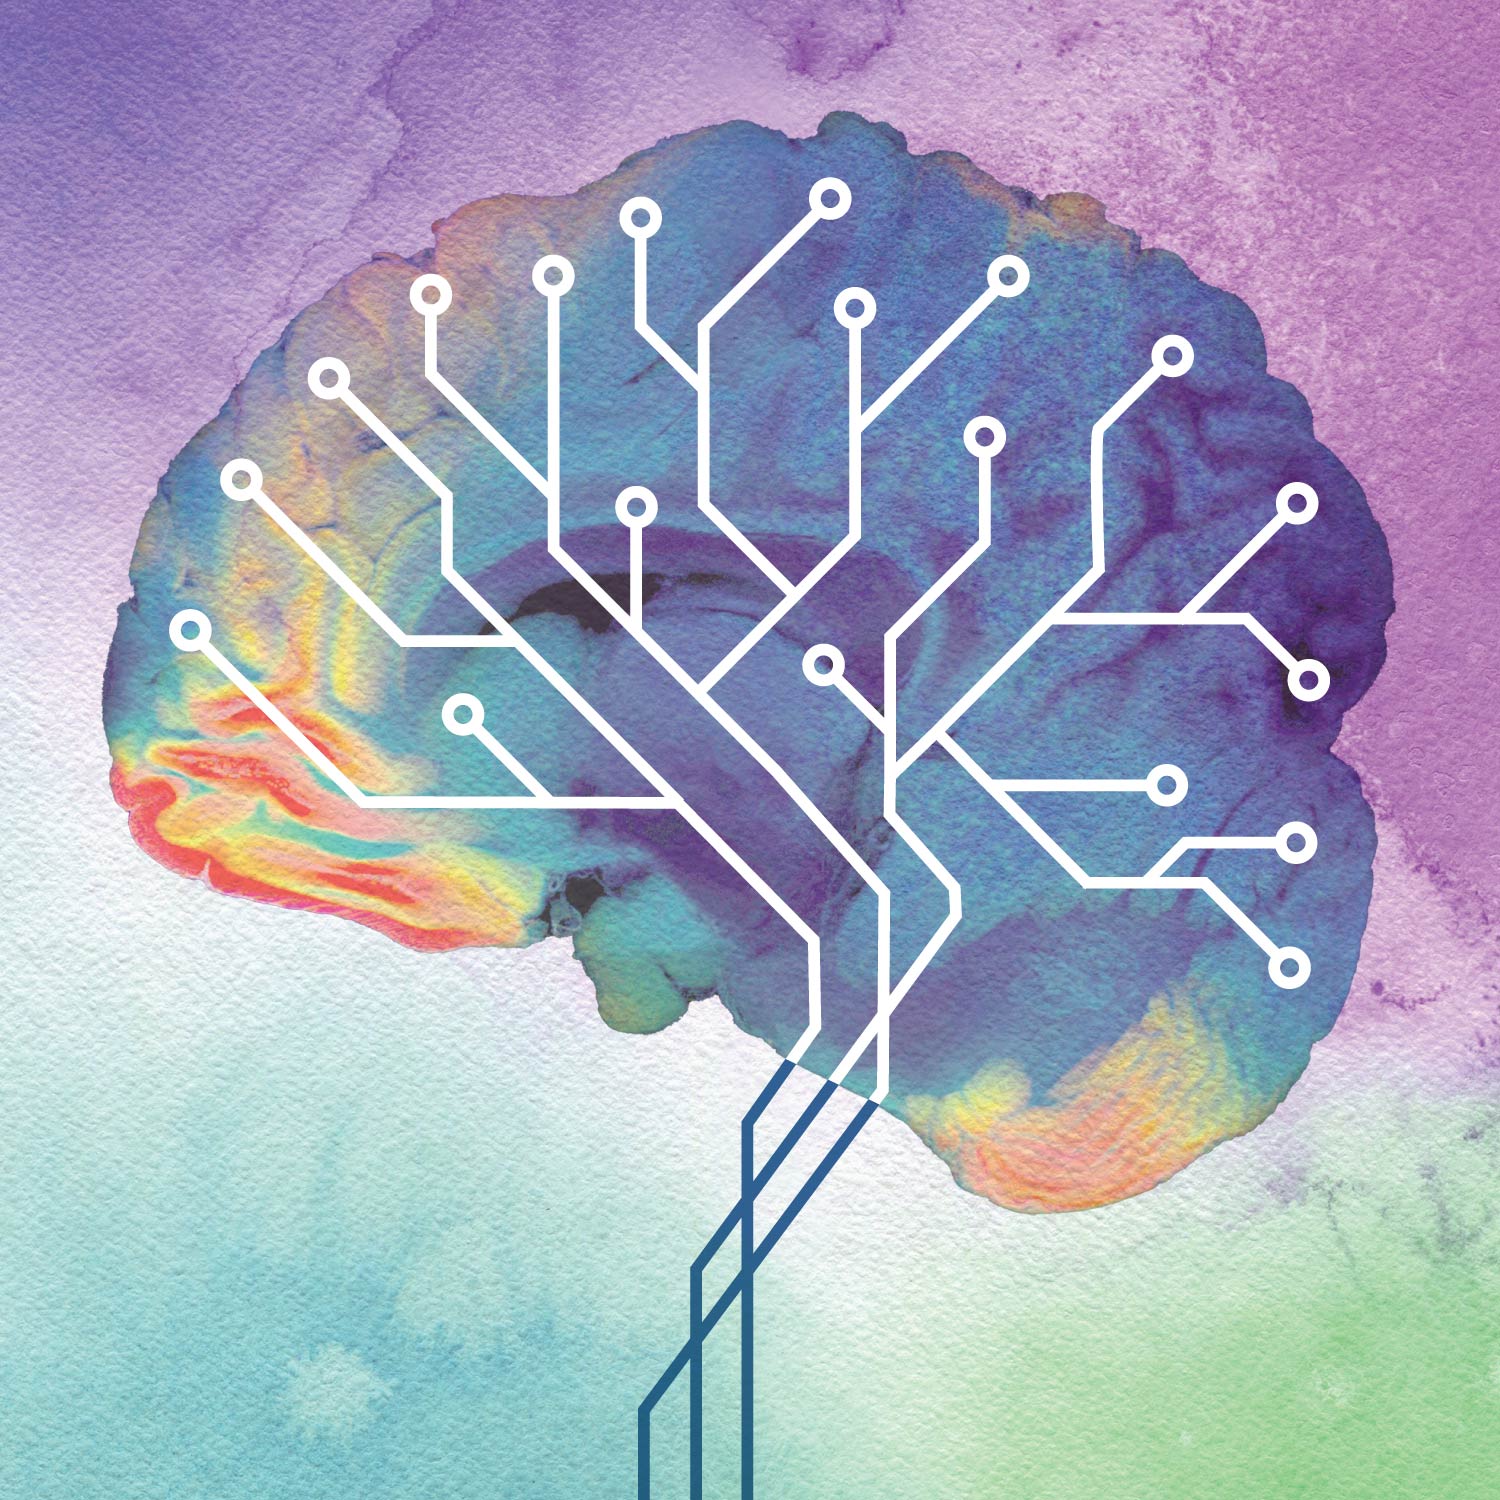 illustration of brain